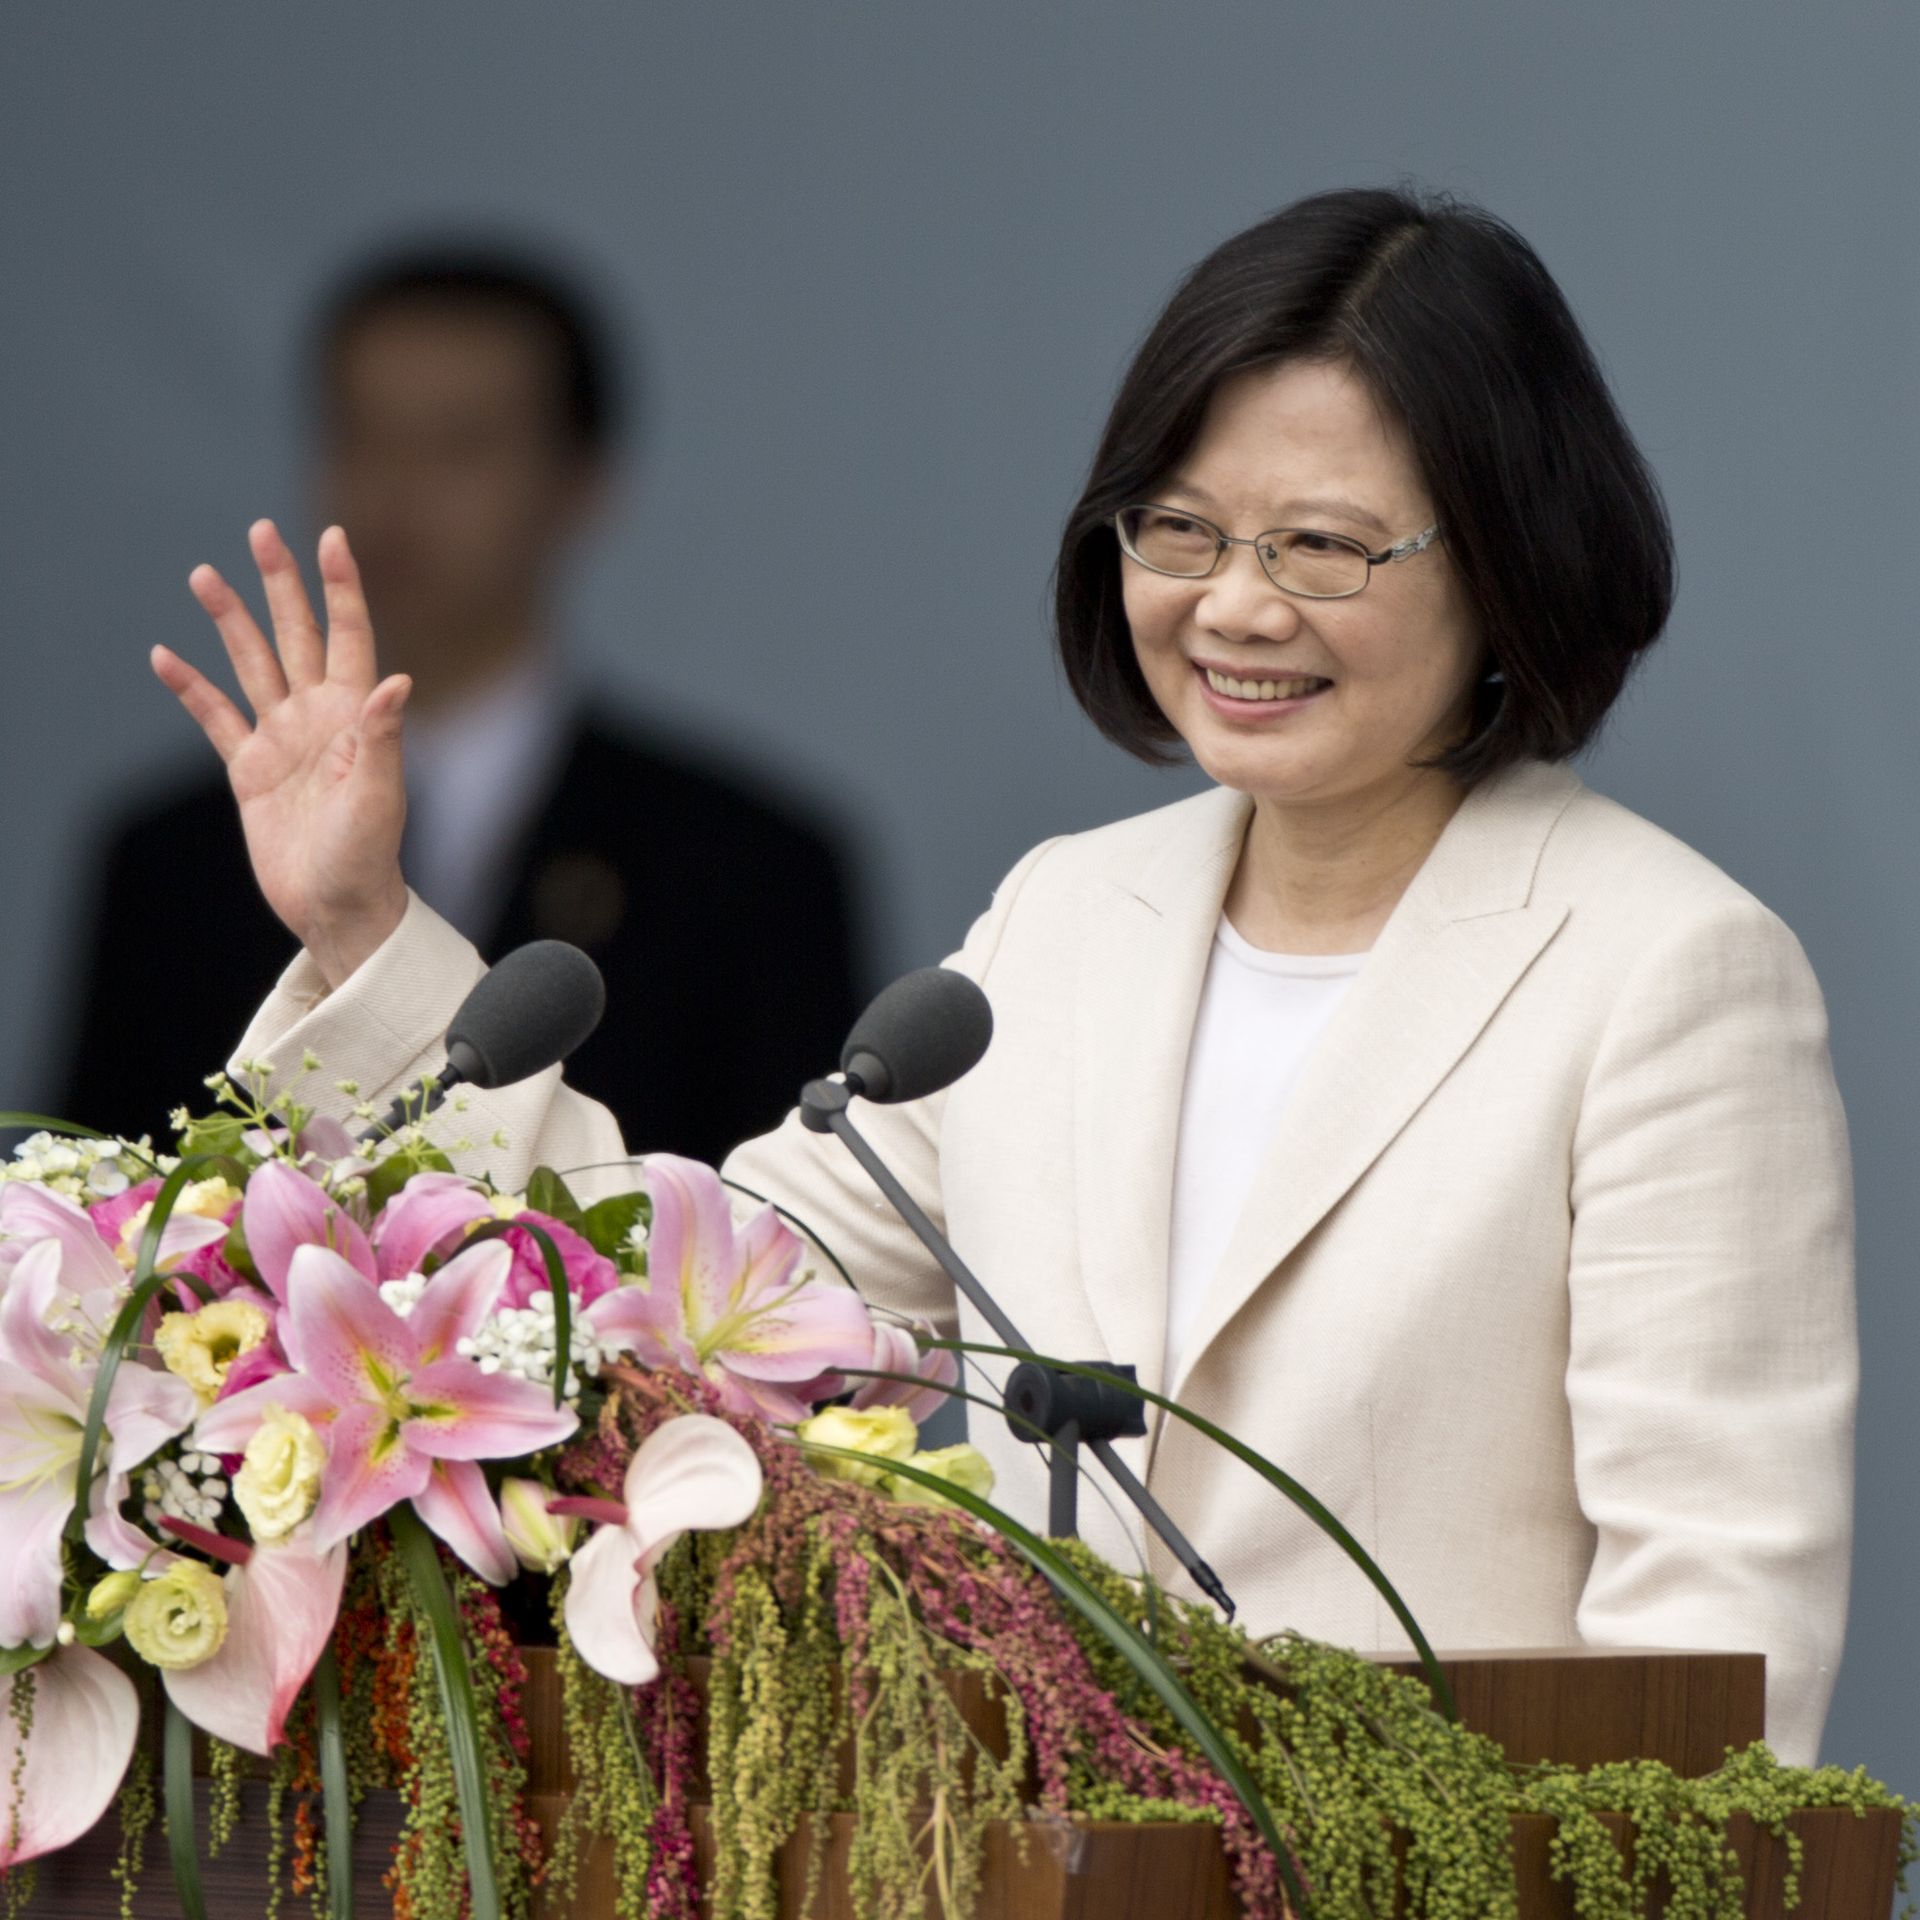 Taiwanese president Tsai Ing-wen waving from behind a lectern